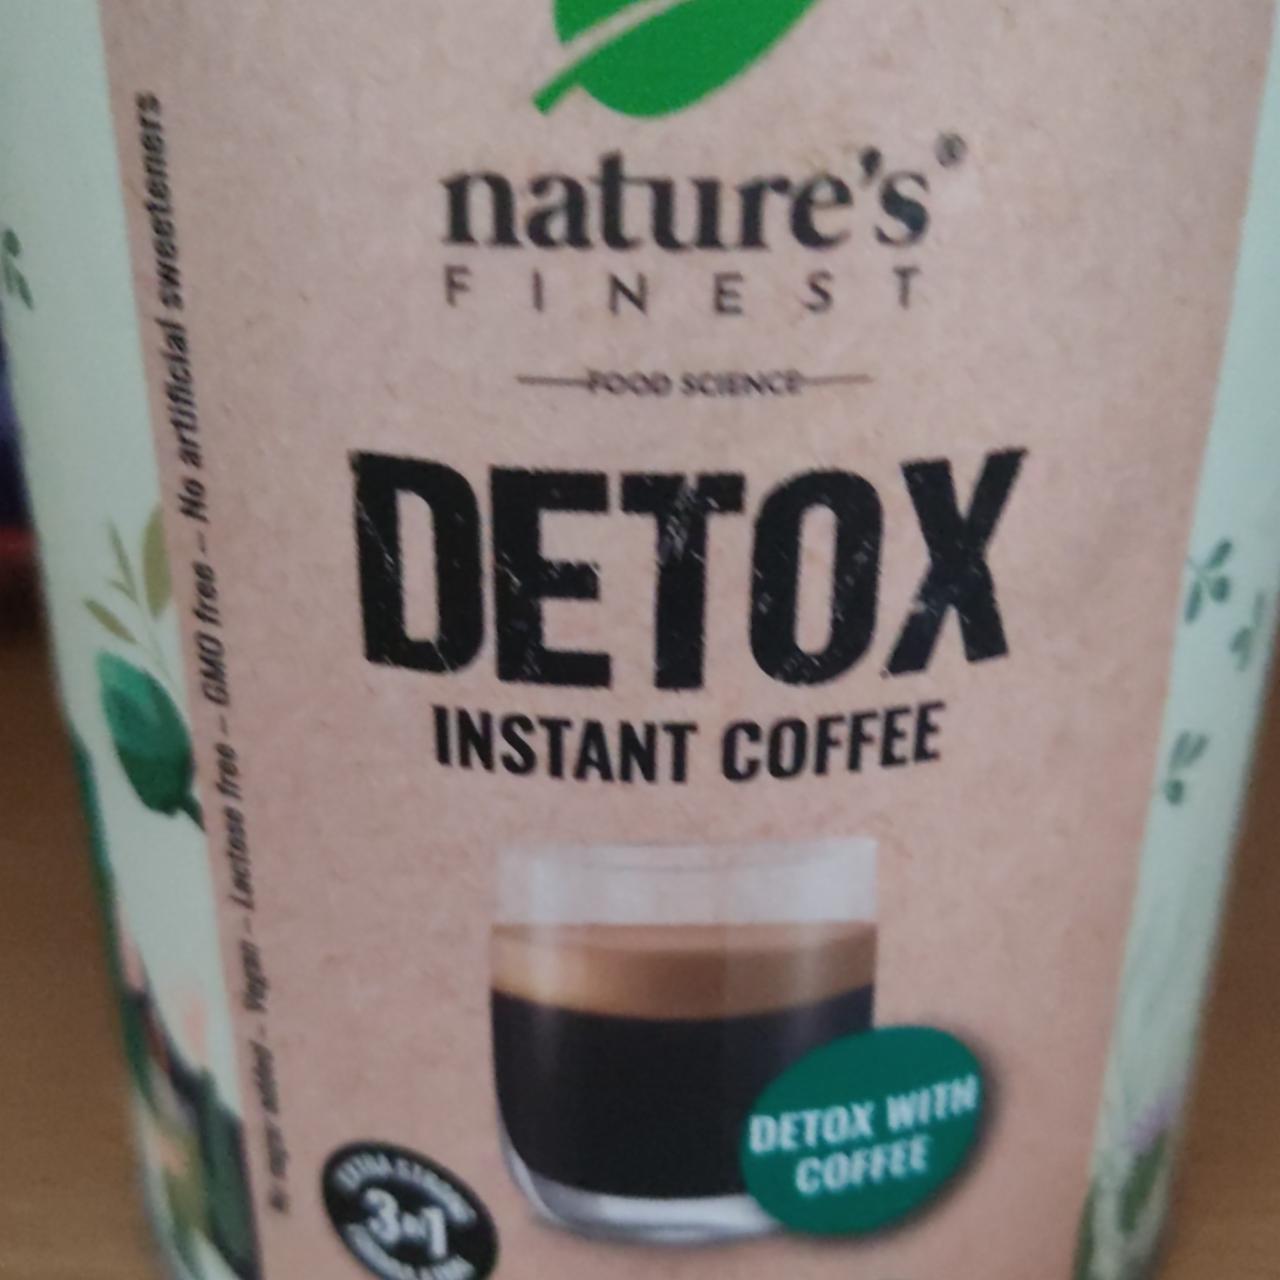 Fotografie - Detox instant coffee Nature's Finest